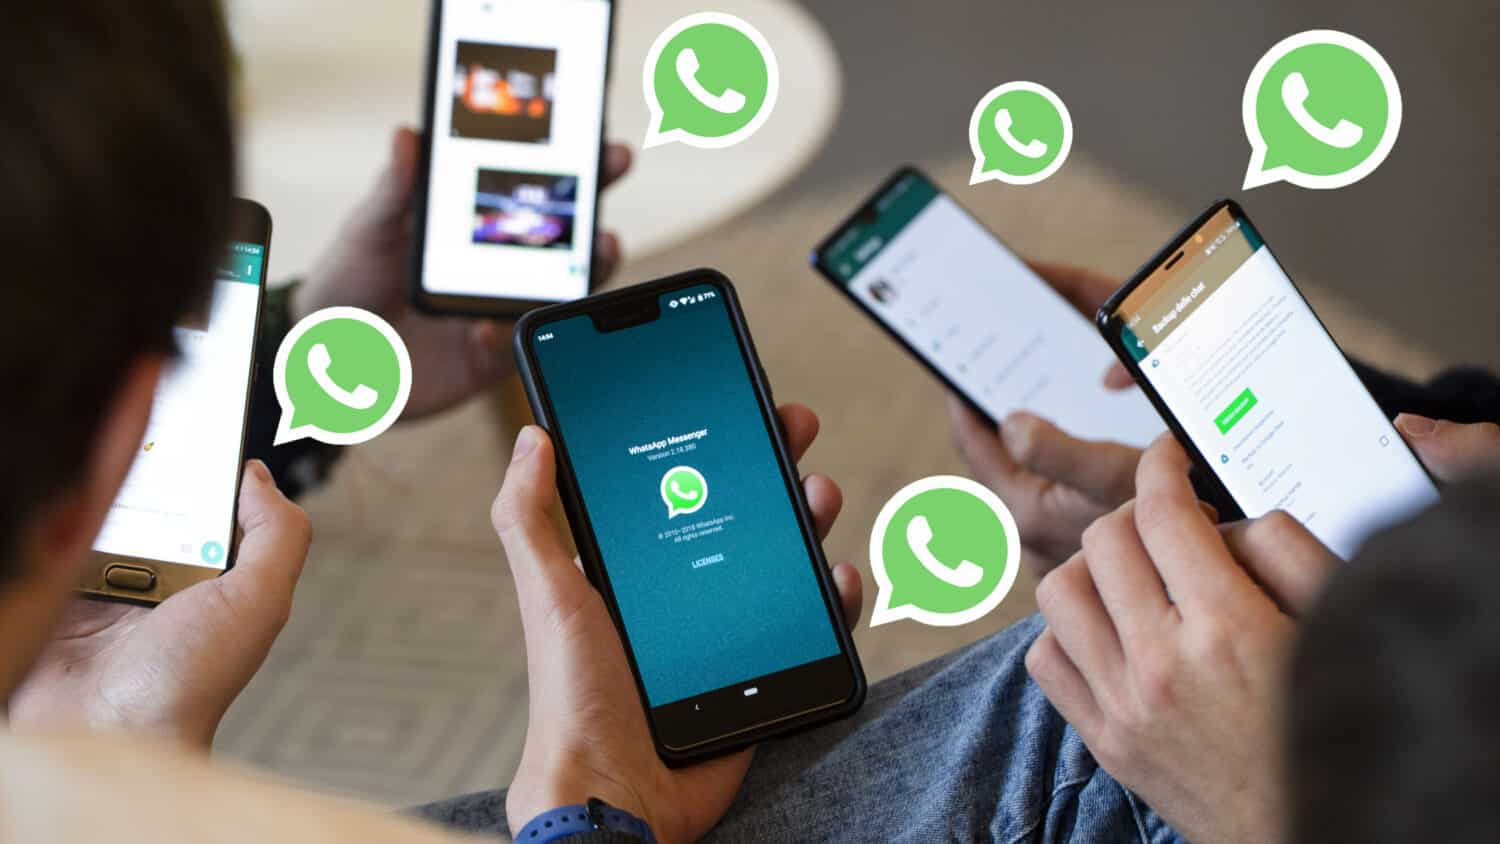 WhatsApp : un mode multi-appareils... mais sur un seul smartphone !